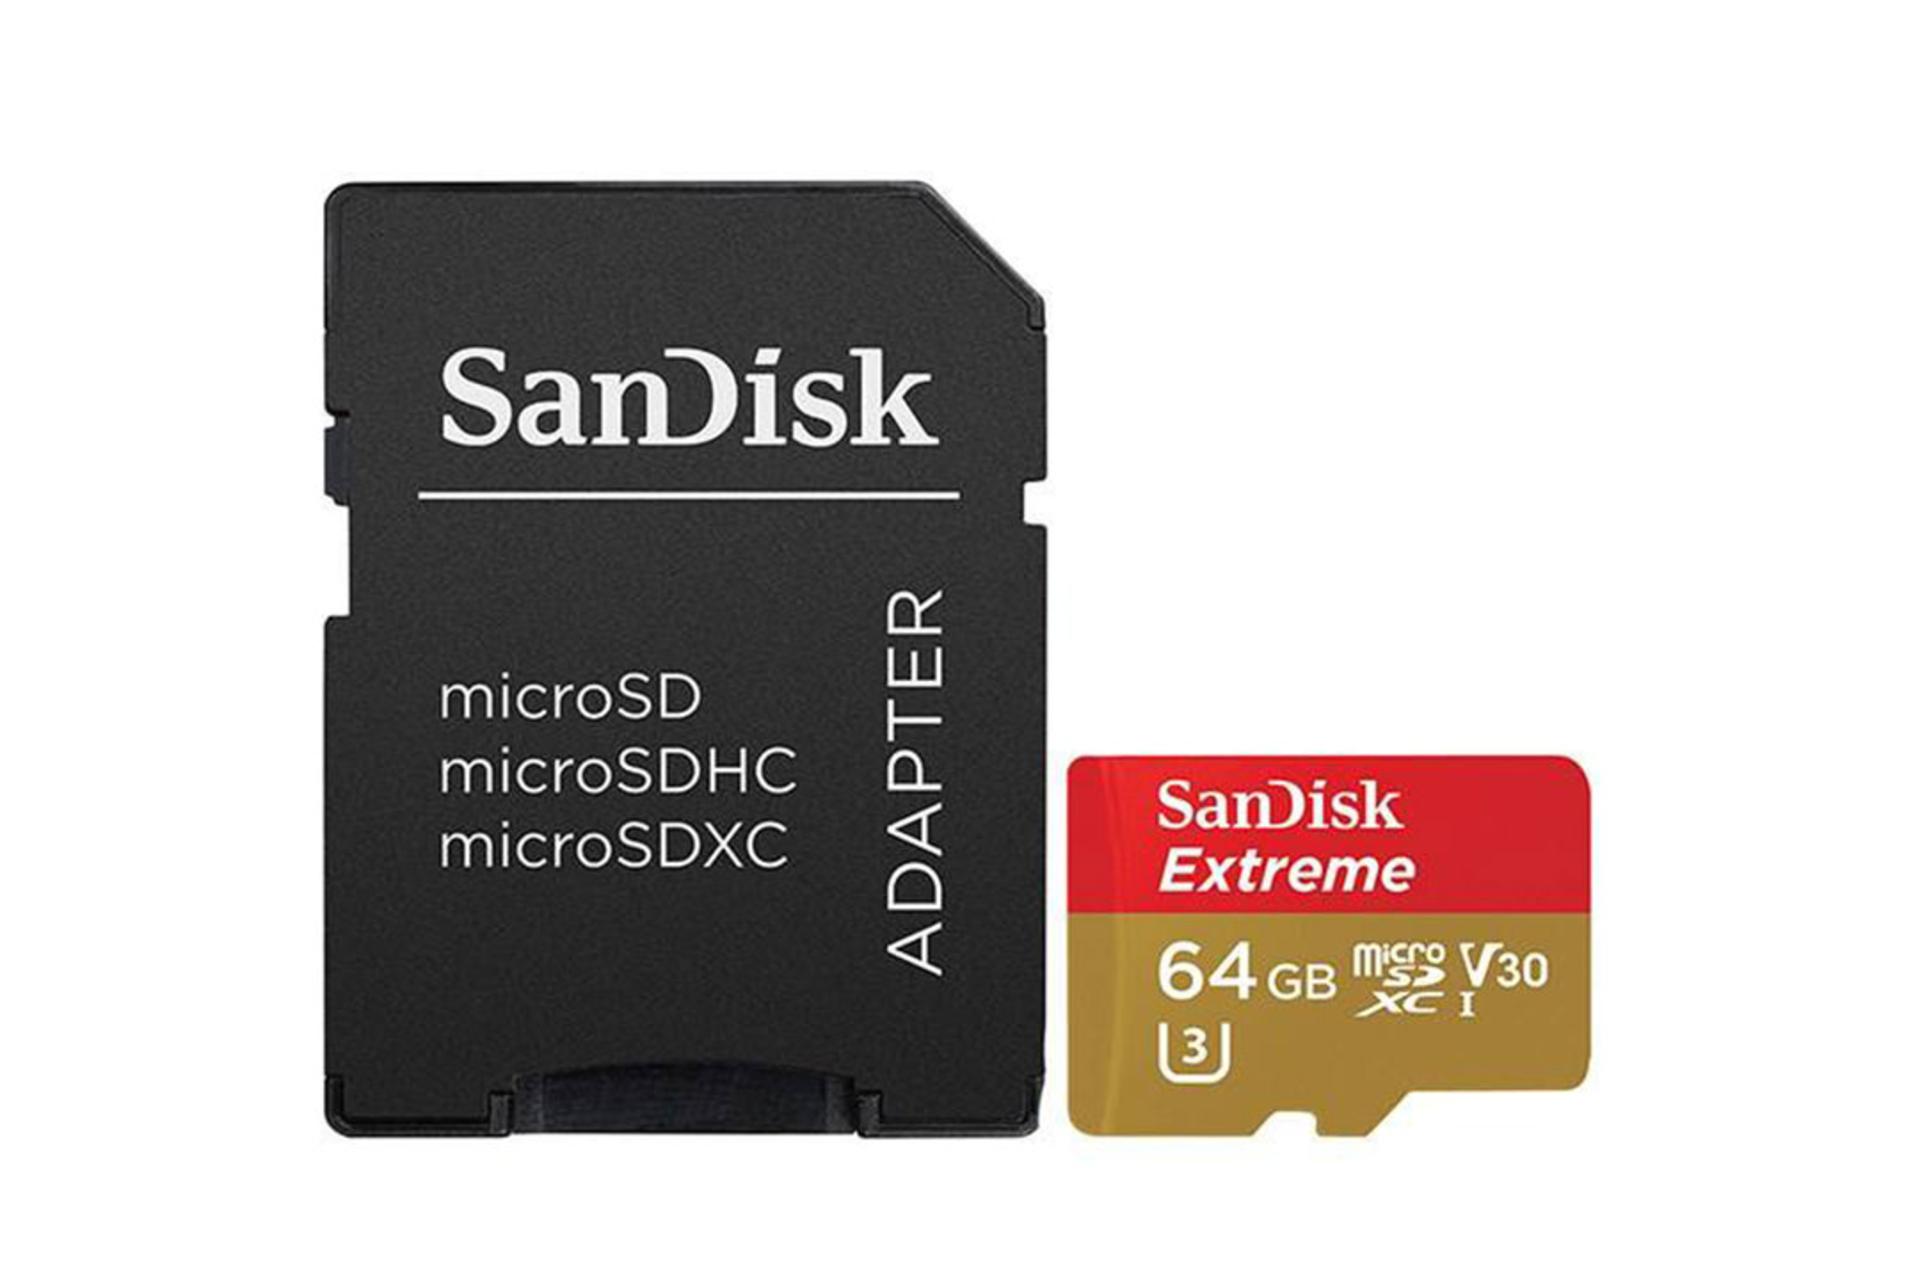 SanDisk Extreme V30 microSDXC Class 10 UHS-I U3 64GB